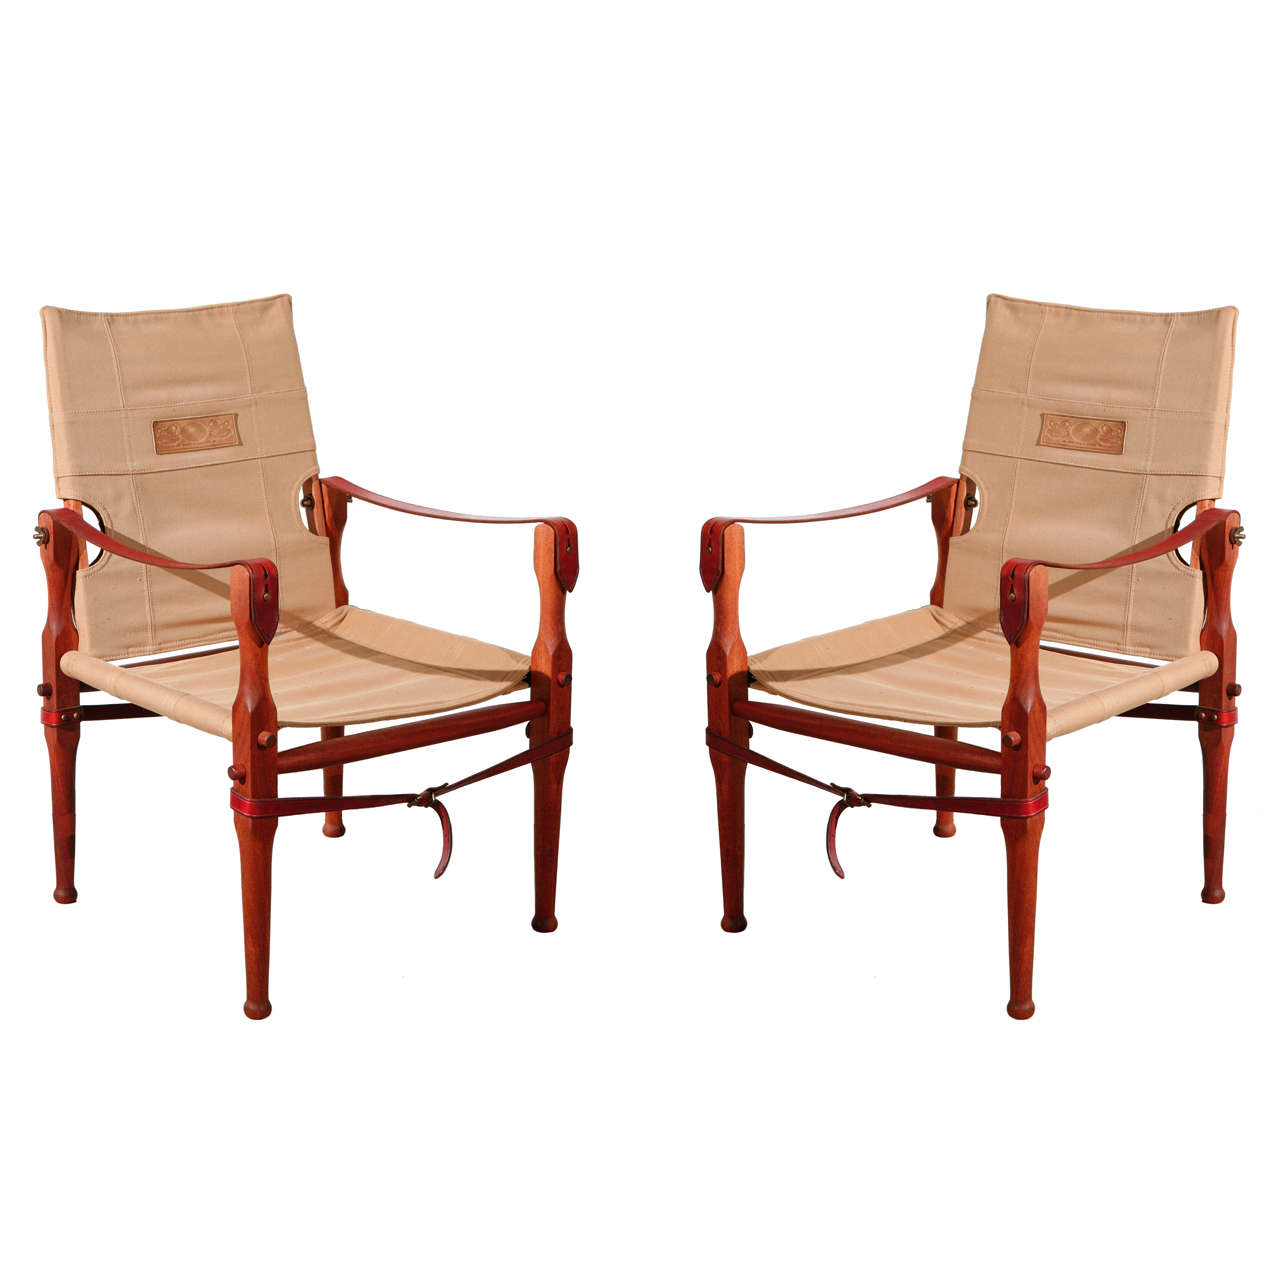 Pair of Melvill & Moon Safari Chairs